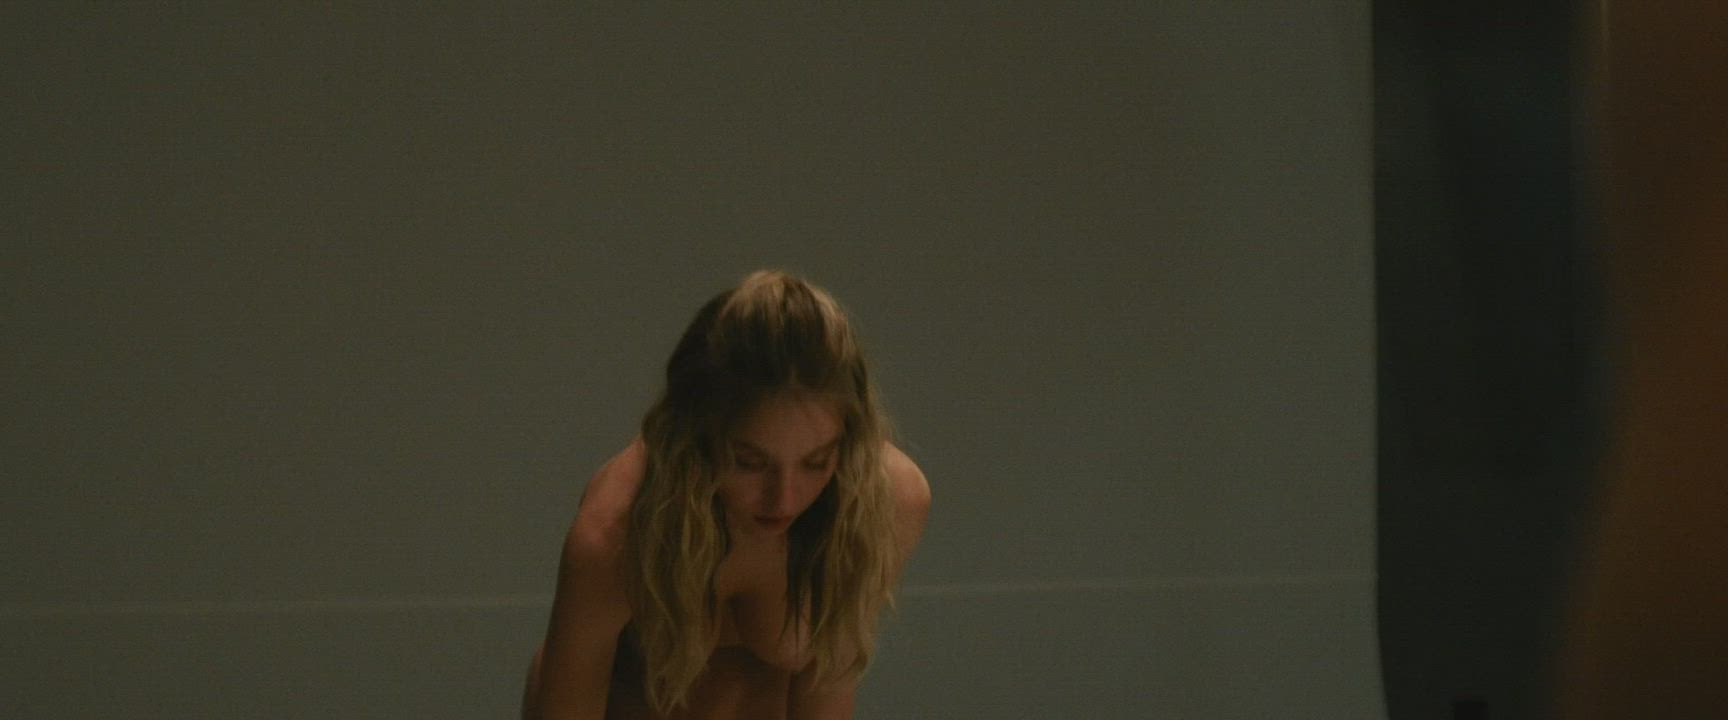 Sydney Sweeney nude in her new movie : video clip